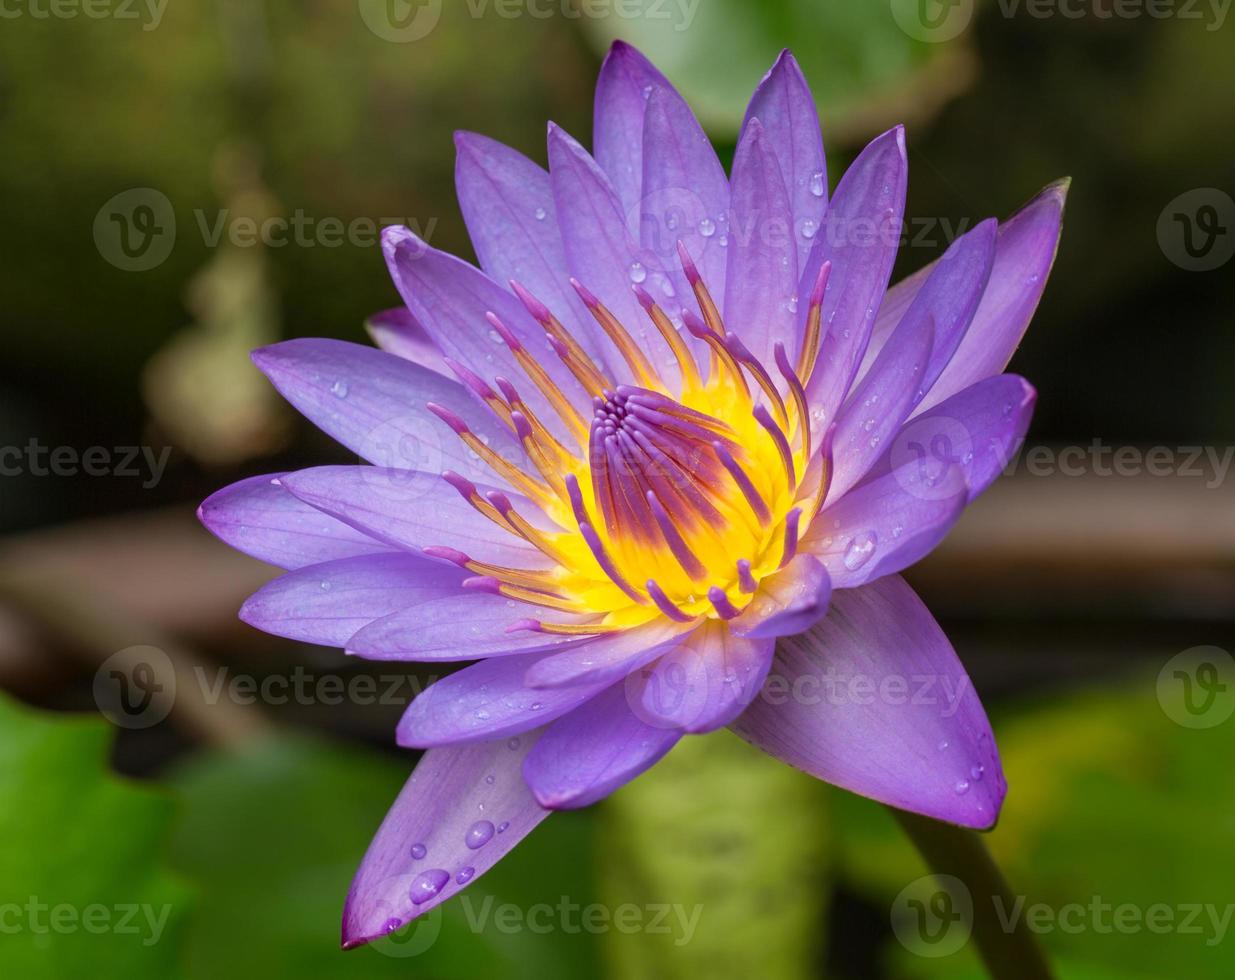 hermosa flor de loto púrpura 1389682 Foto de stock en Vecteezy